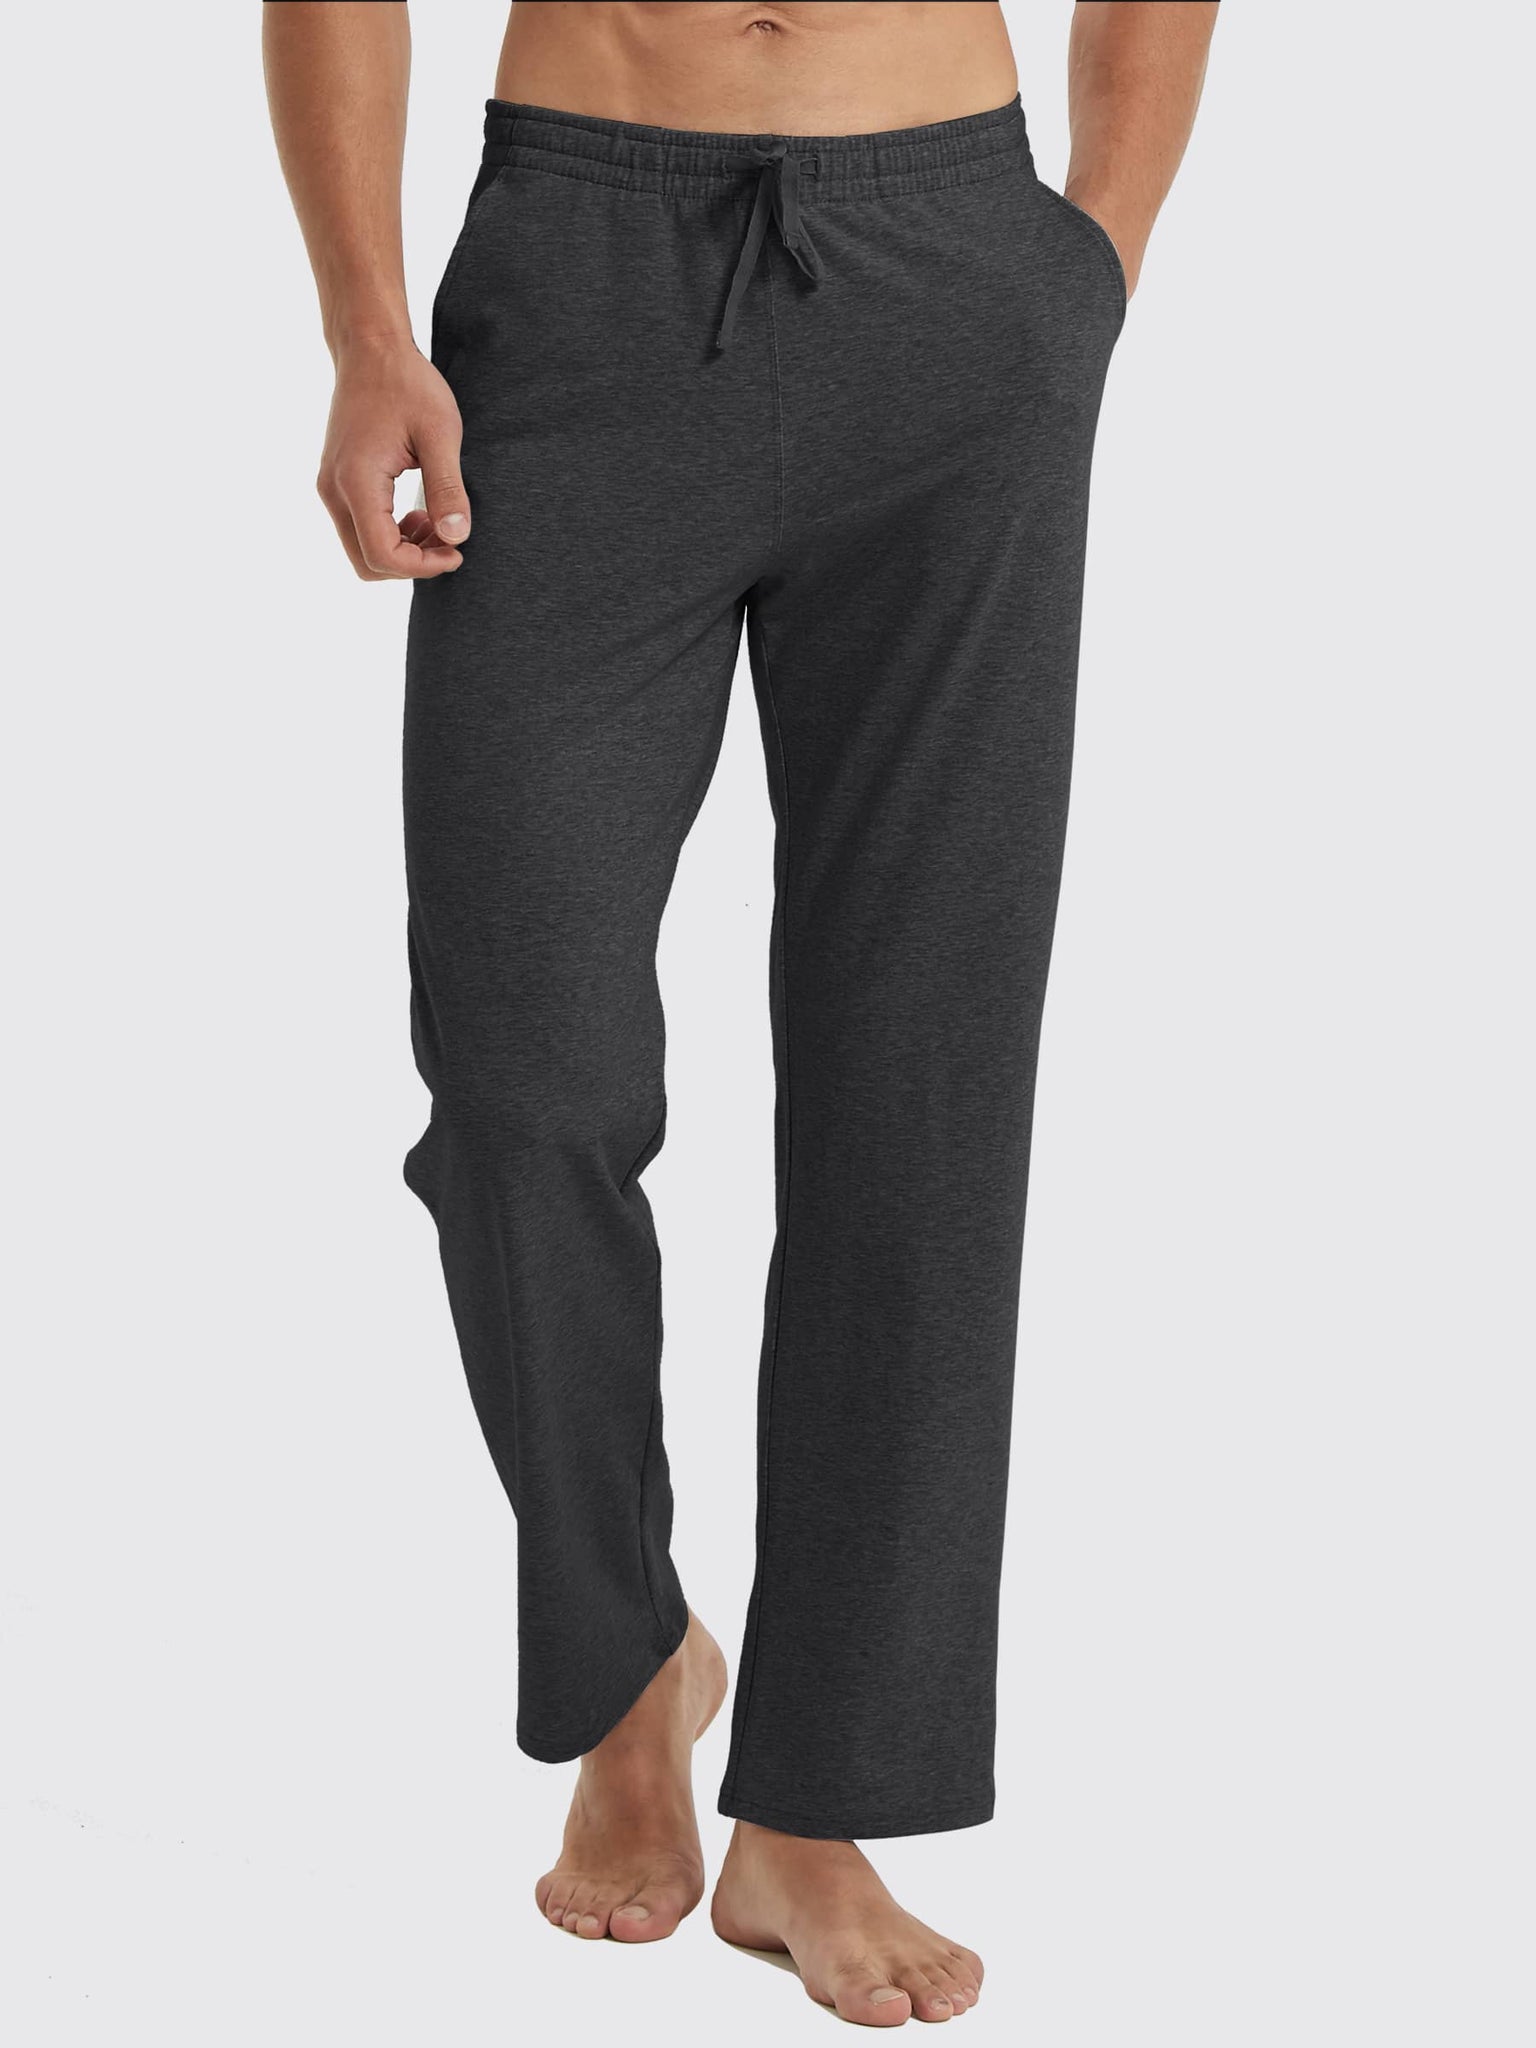 Men's Cotton Yoga Balance Sweatpants_Gray_model1